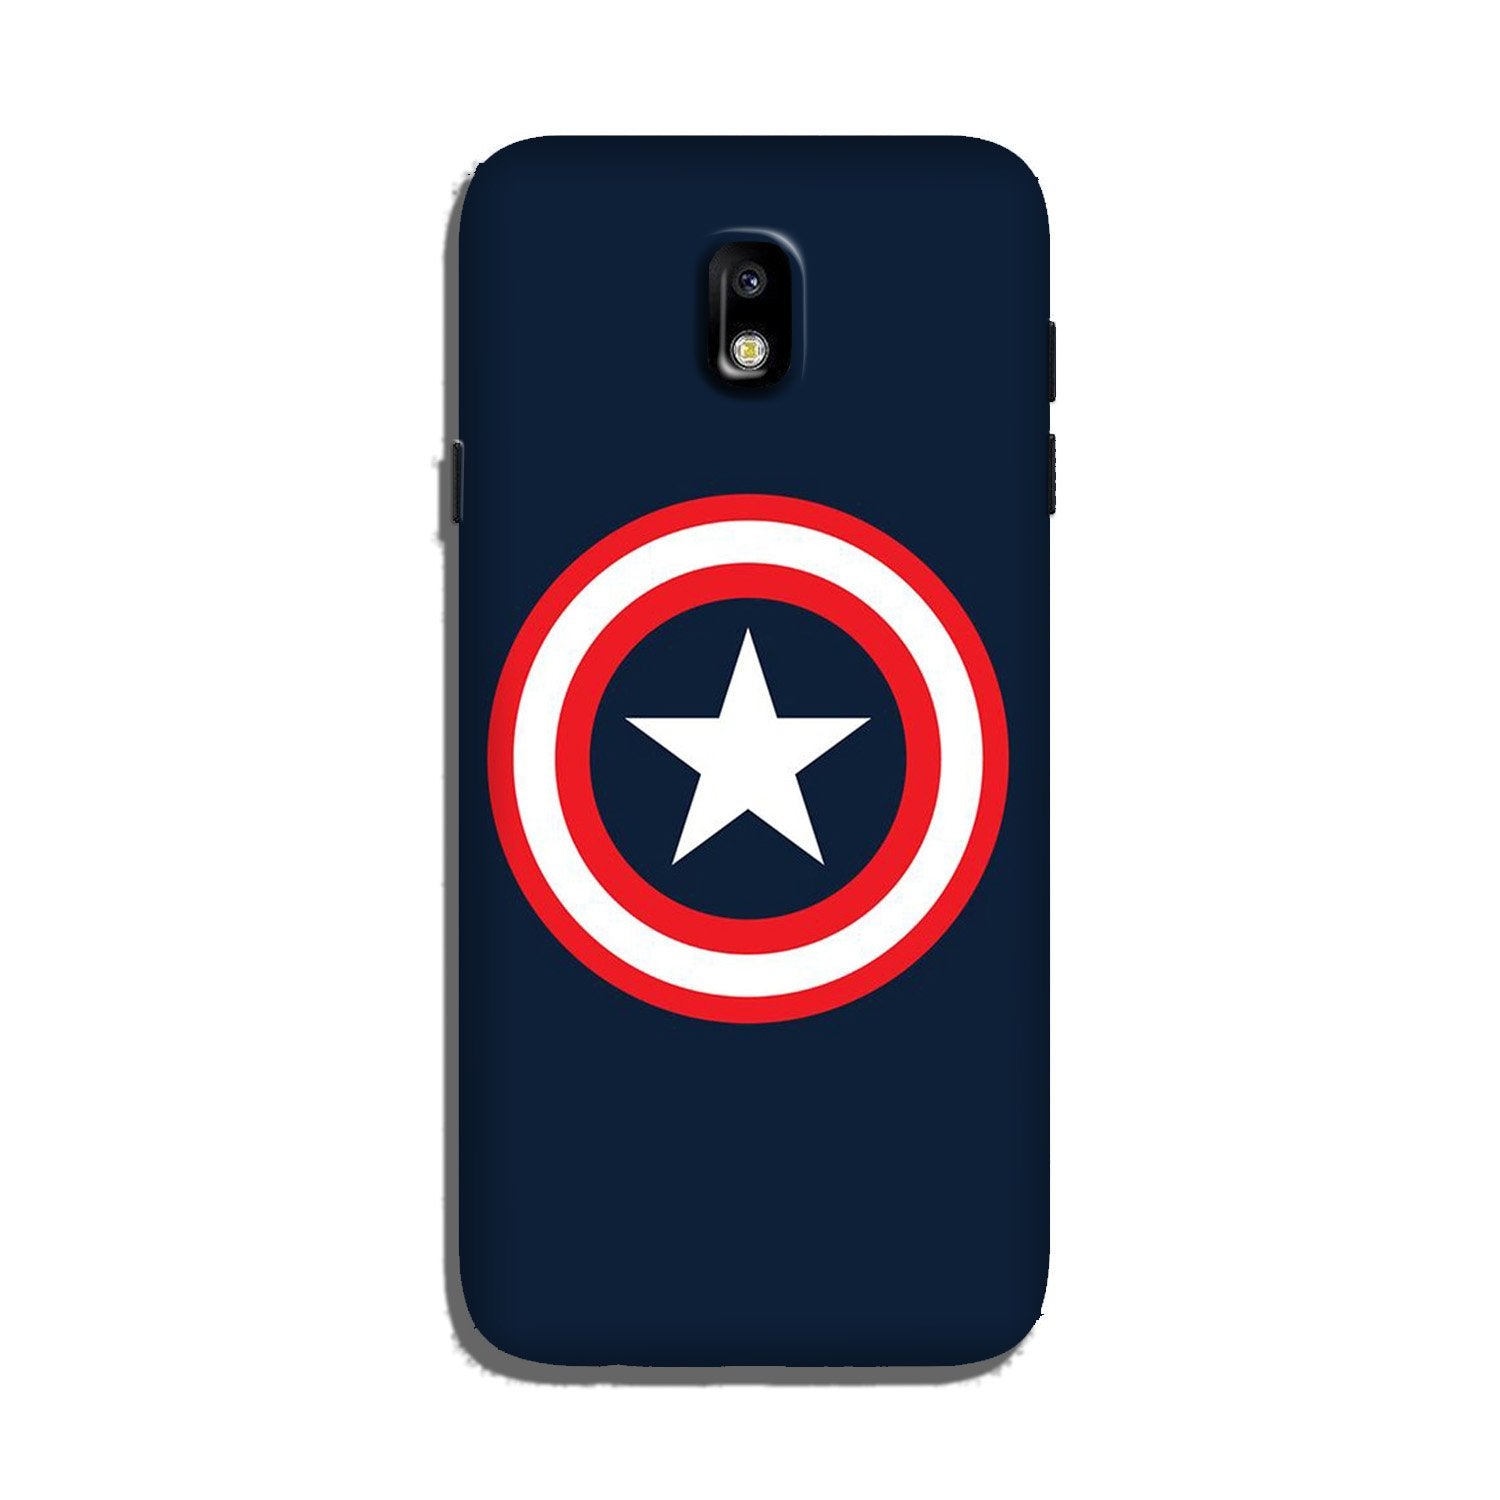 Captain America Case for Galaxy J7 Pro